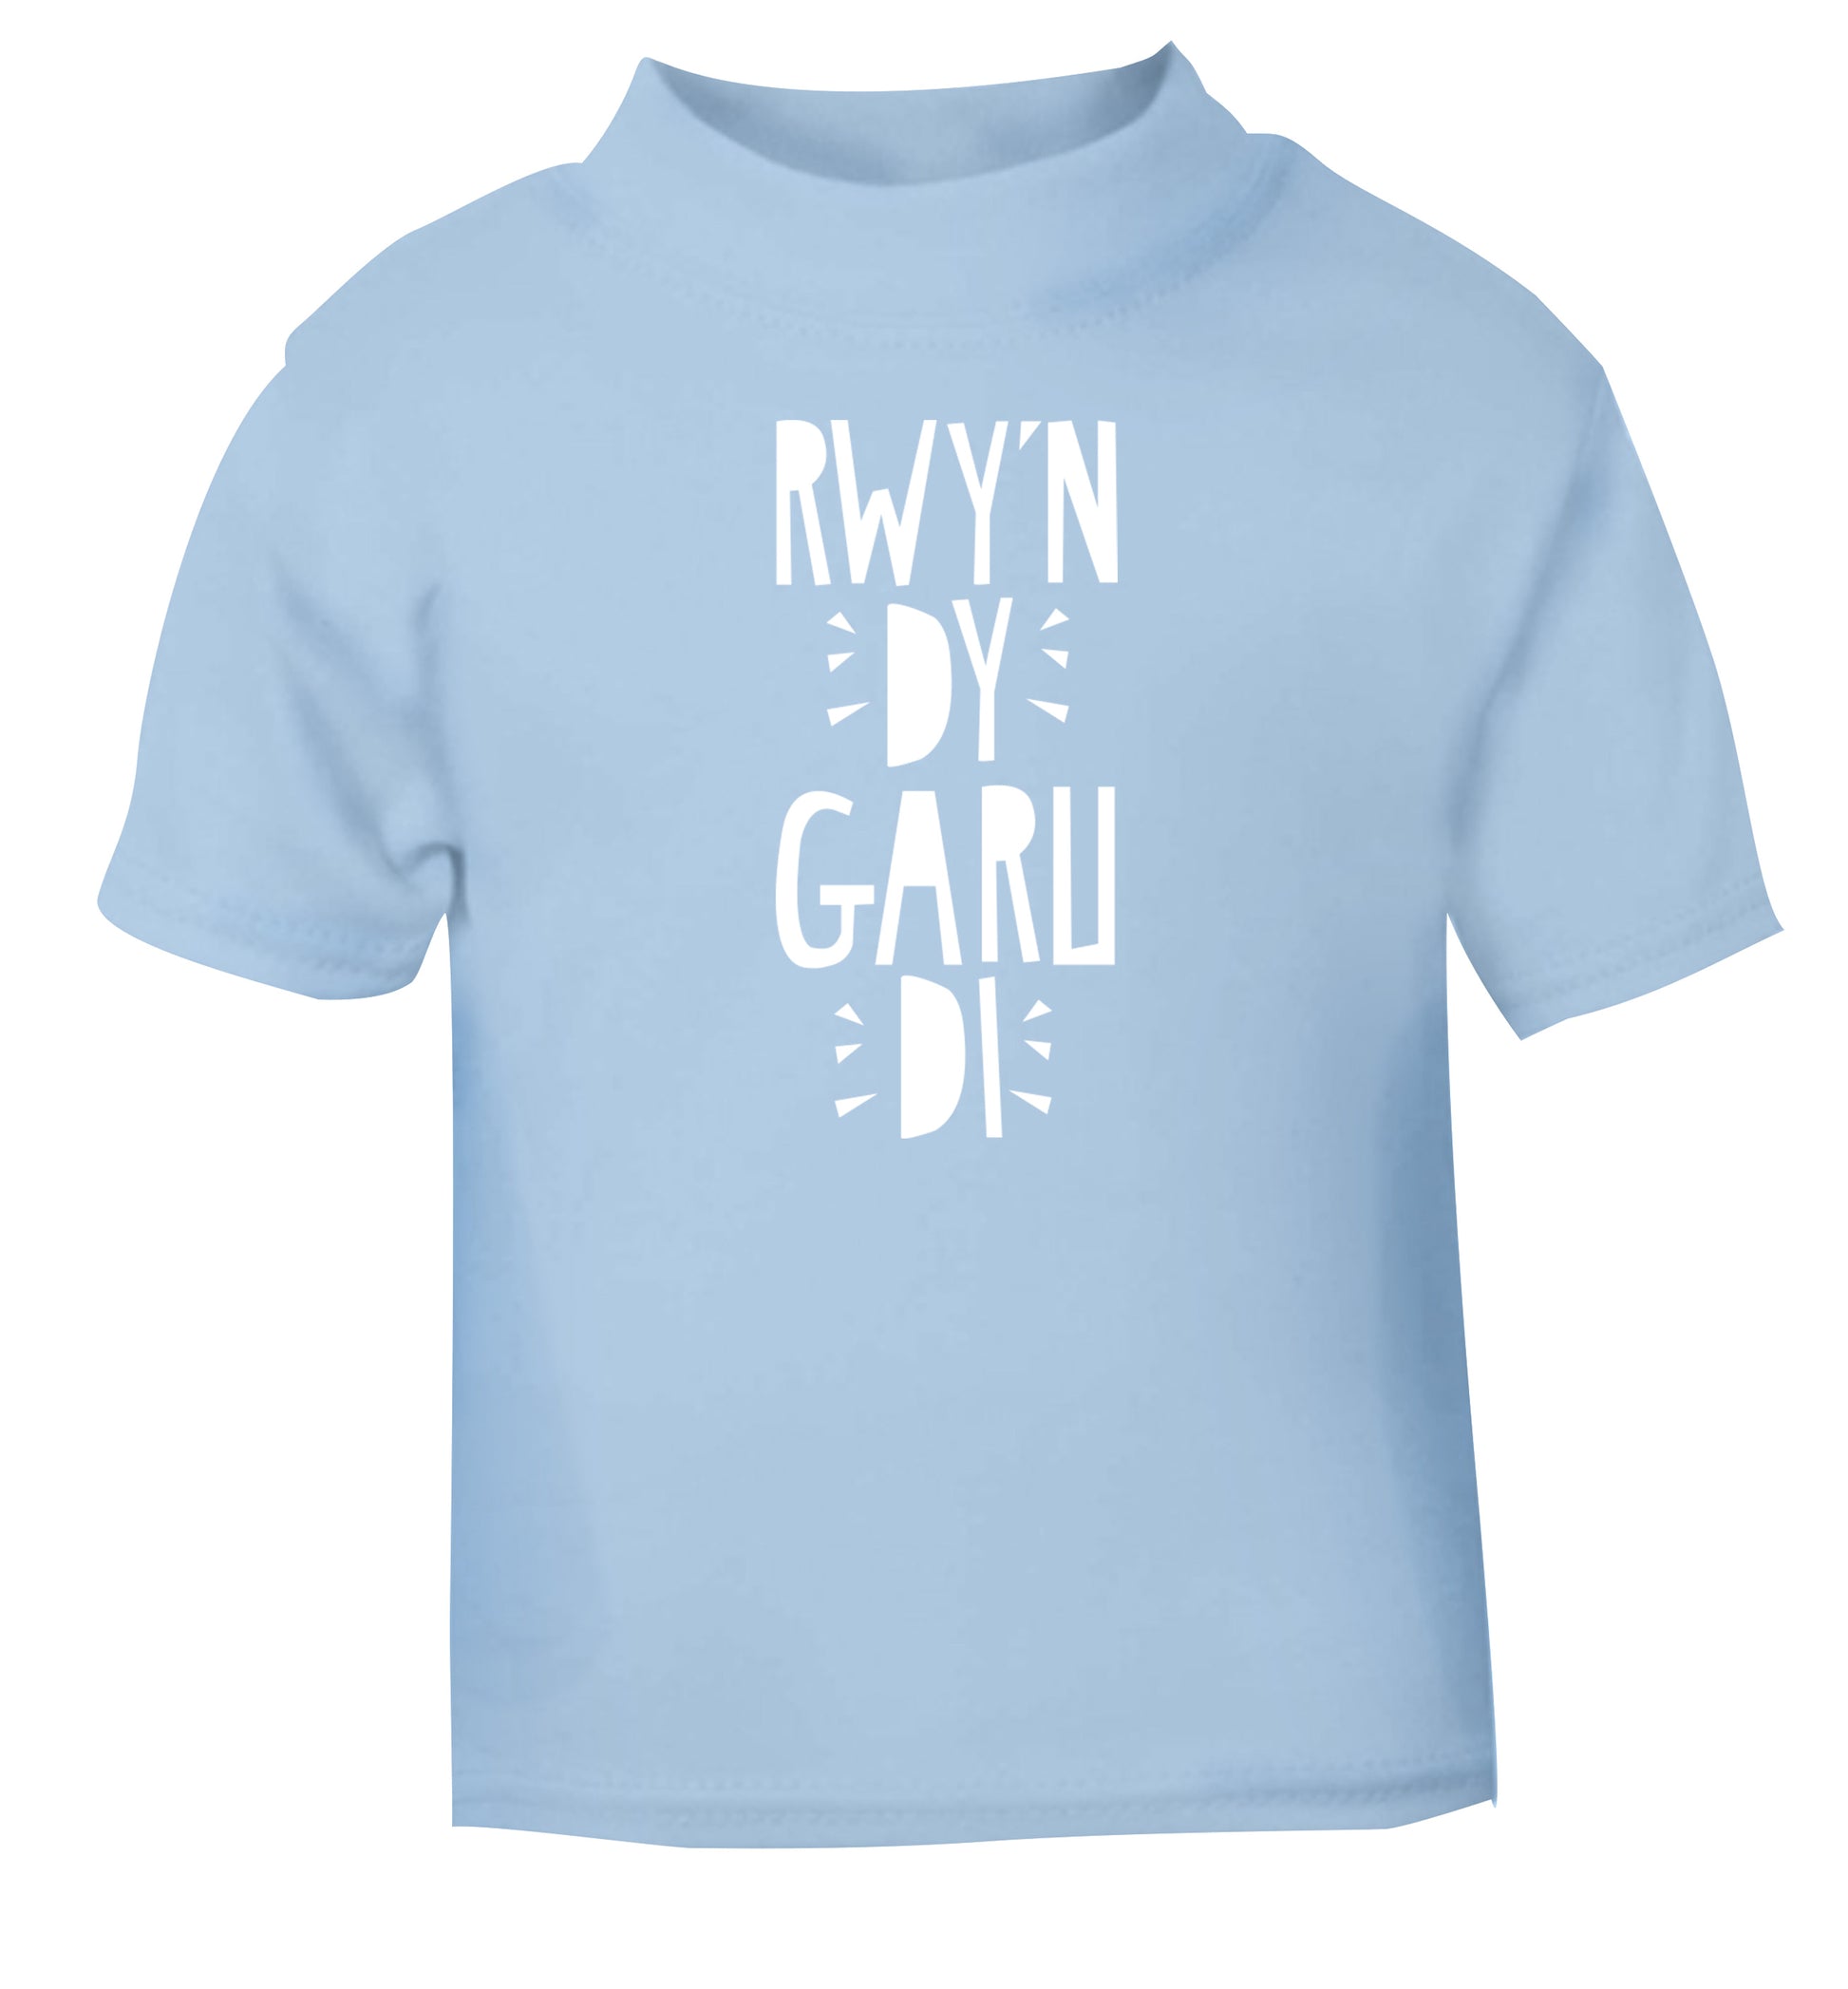 Rwy'n dy garu di - I love you light blue Baby Toddler Tshirt 2 Years